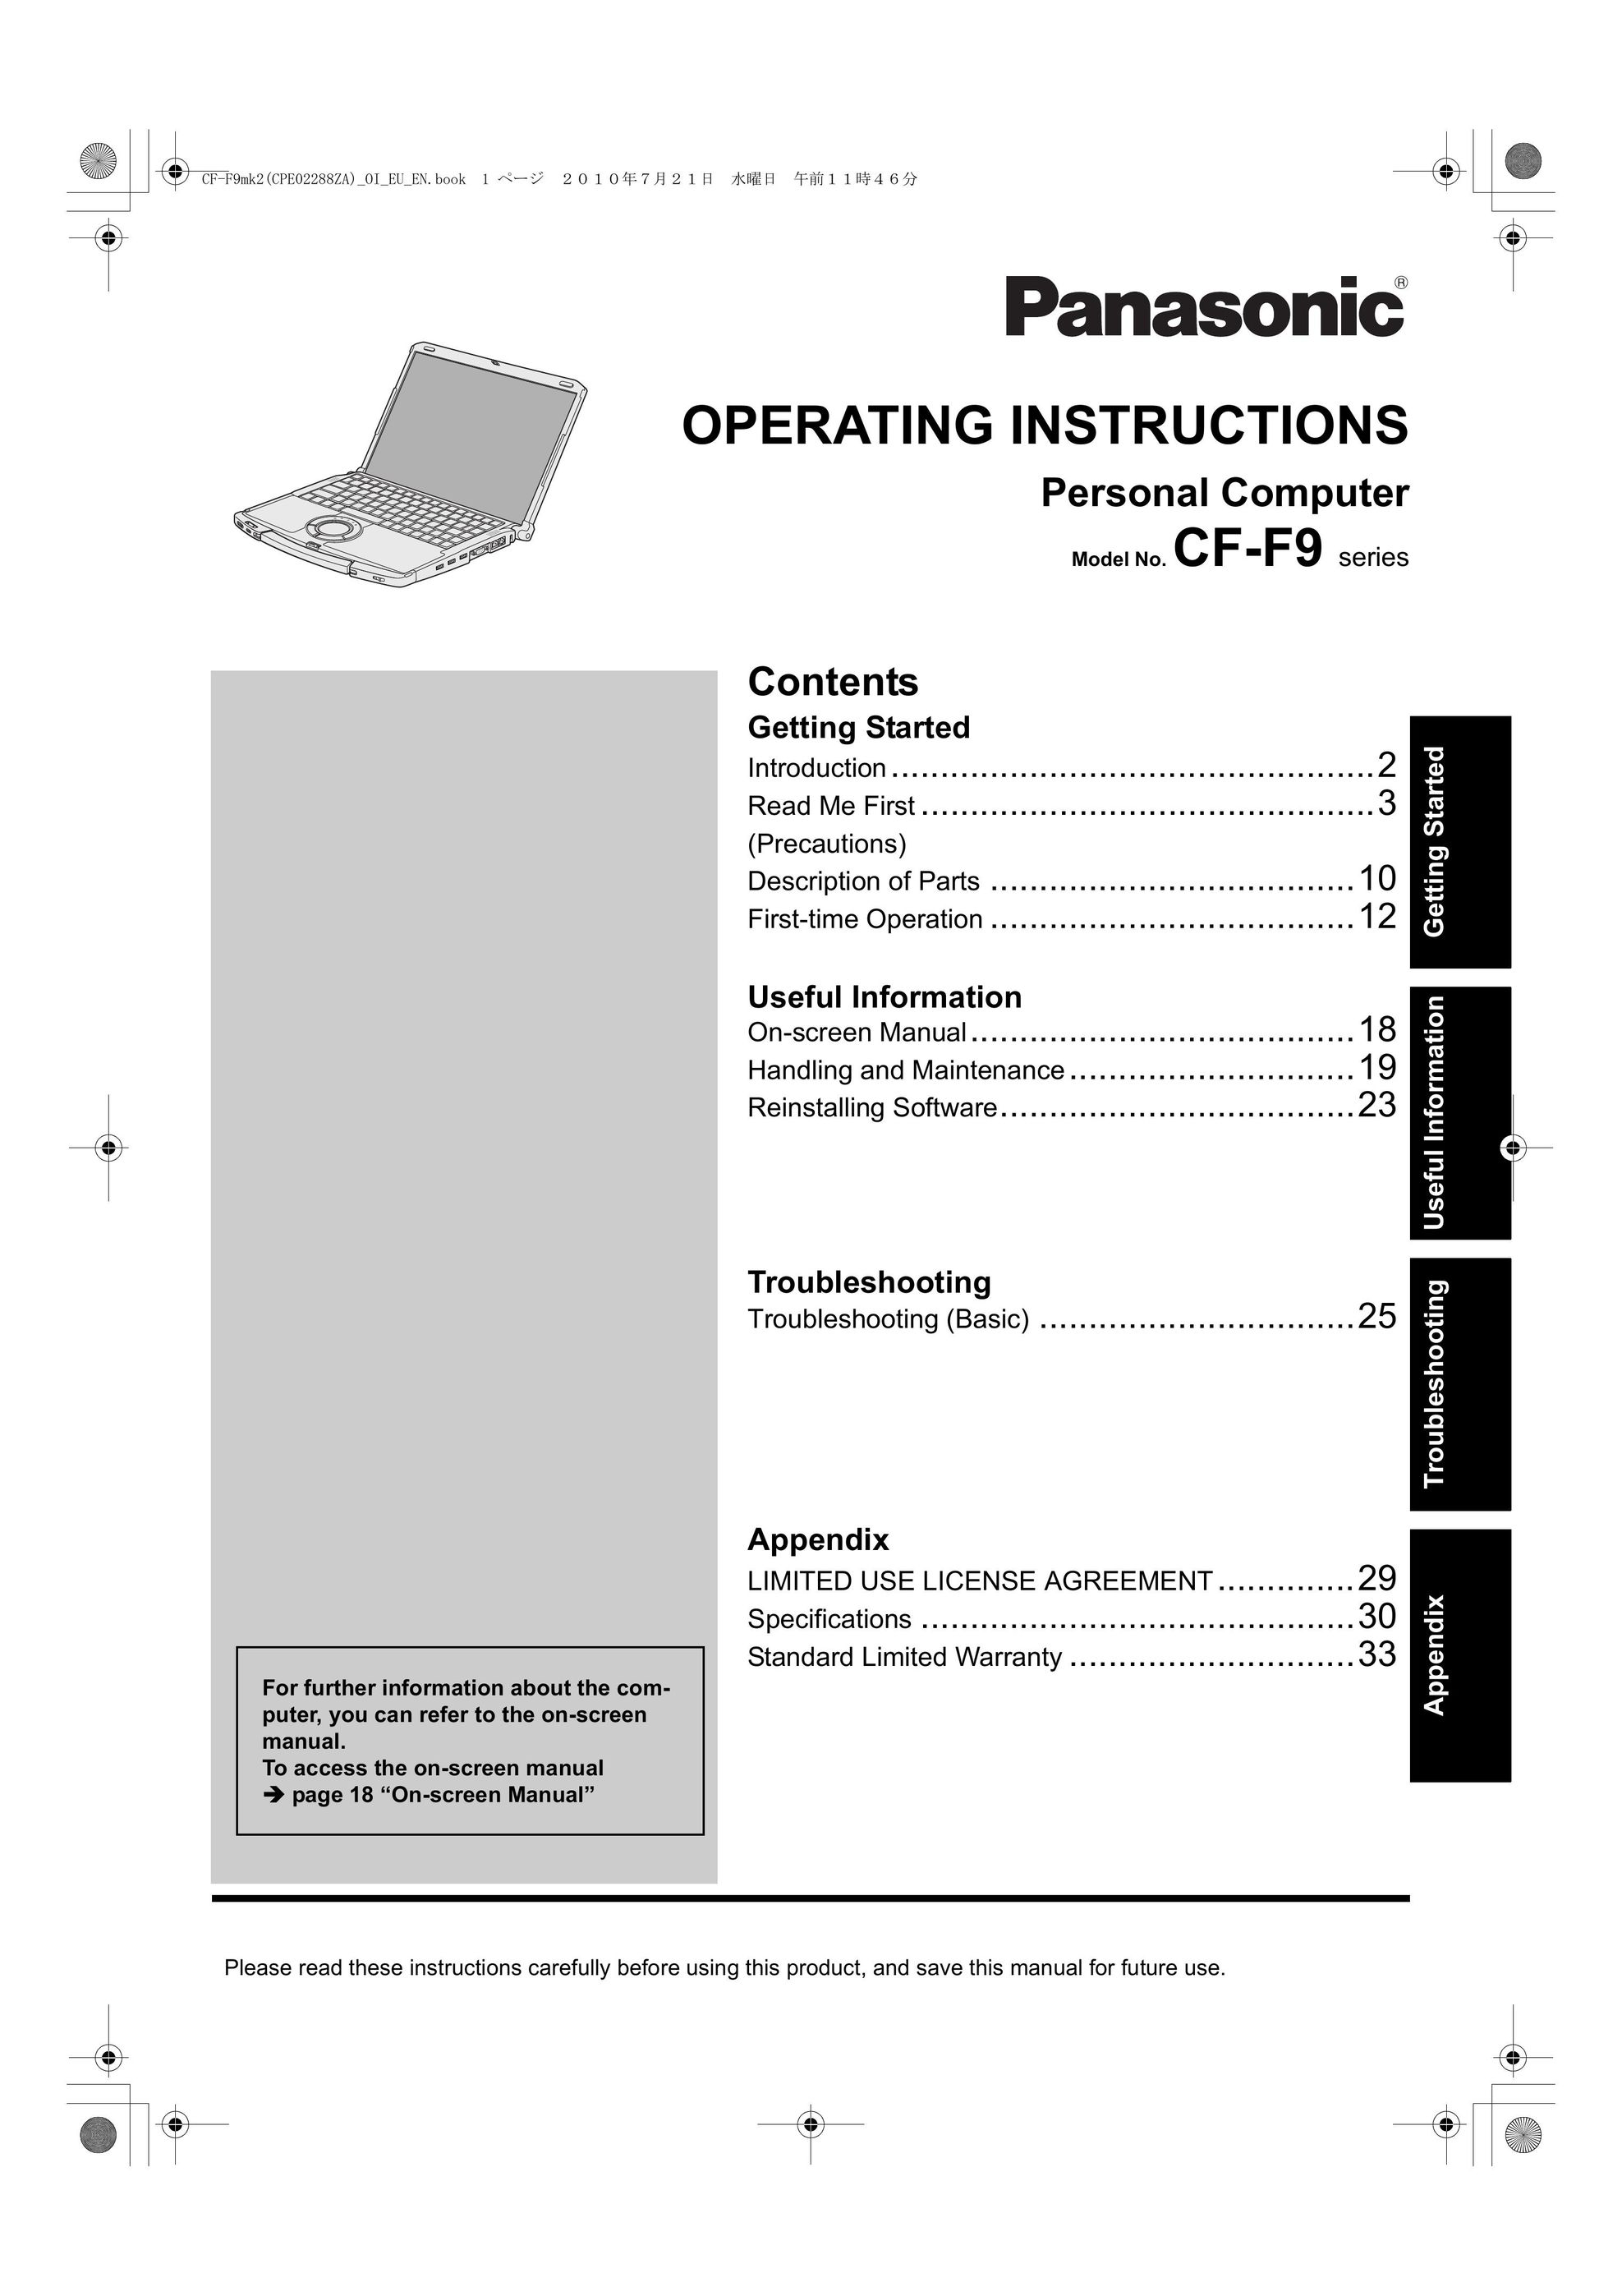 Panasonic CF-F9 Personal Computer User Manual